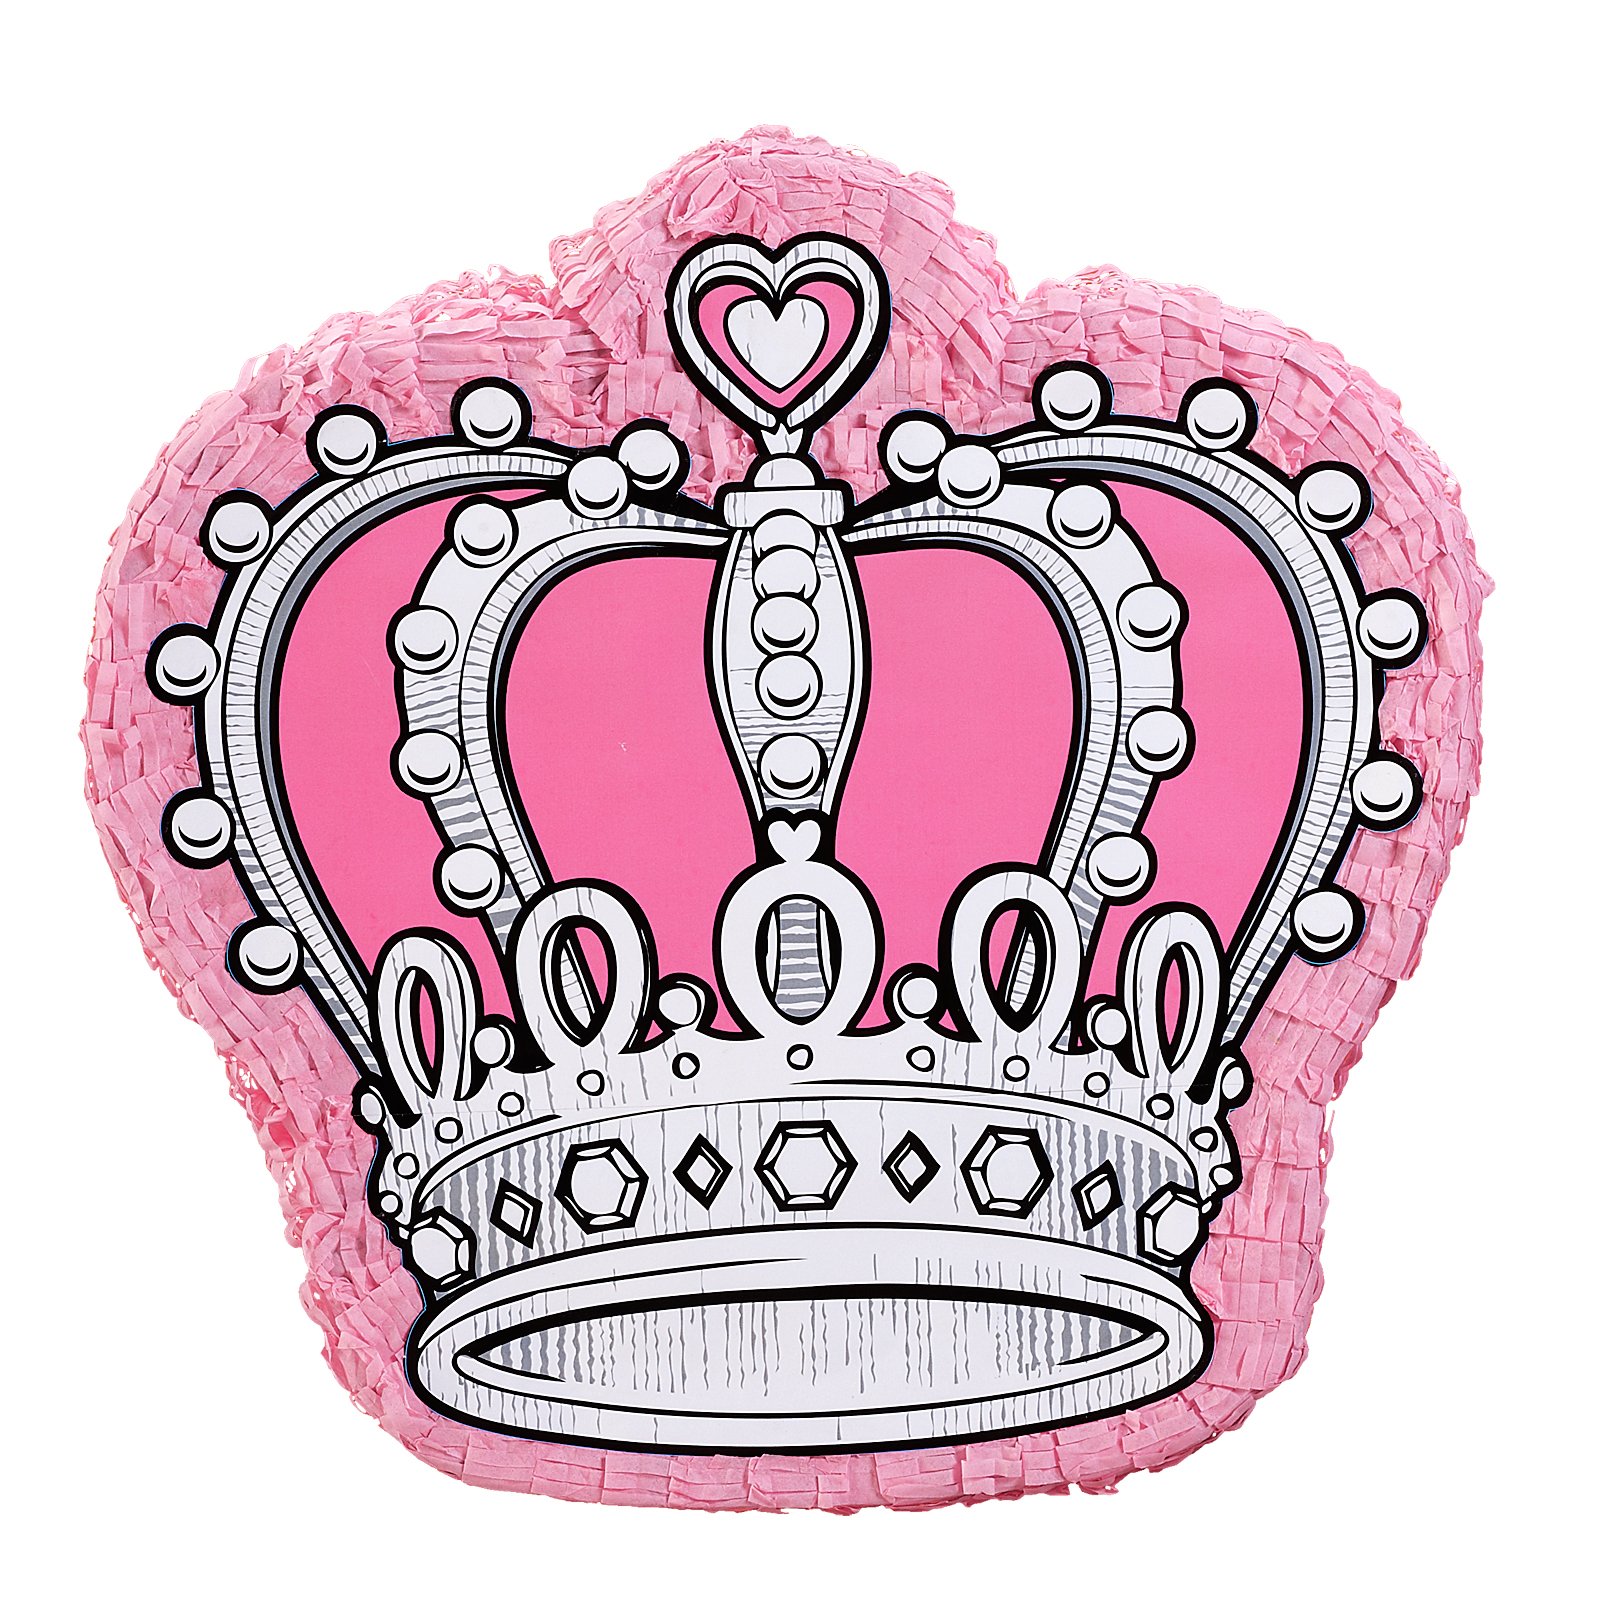 Coolest Princess Birthday Party Ideas - ClipArt Best - ClipArt Best